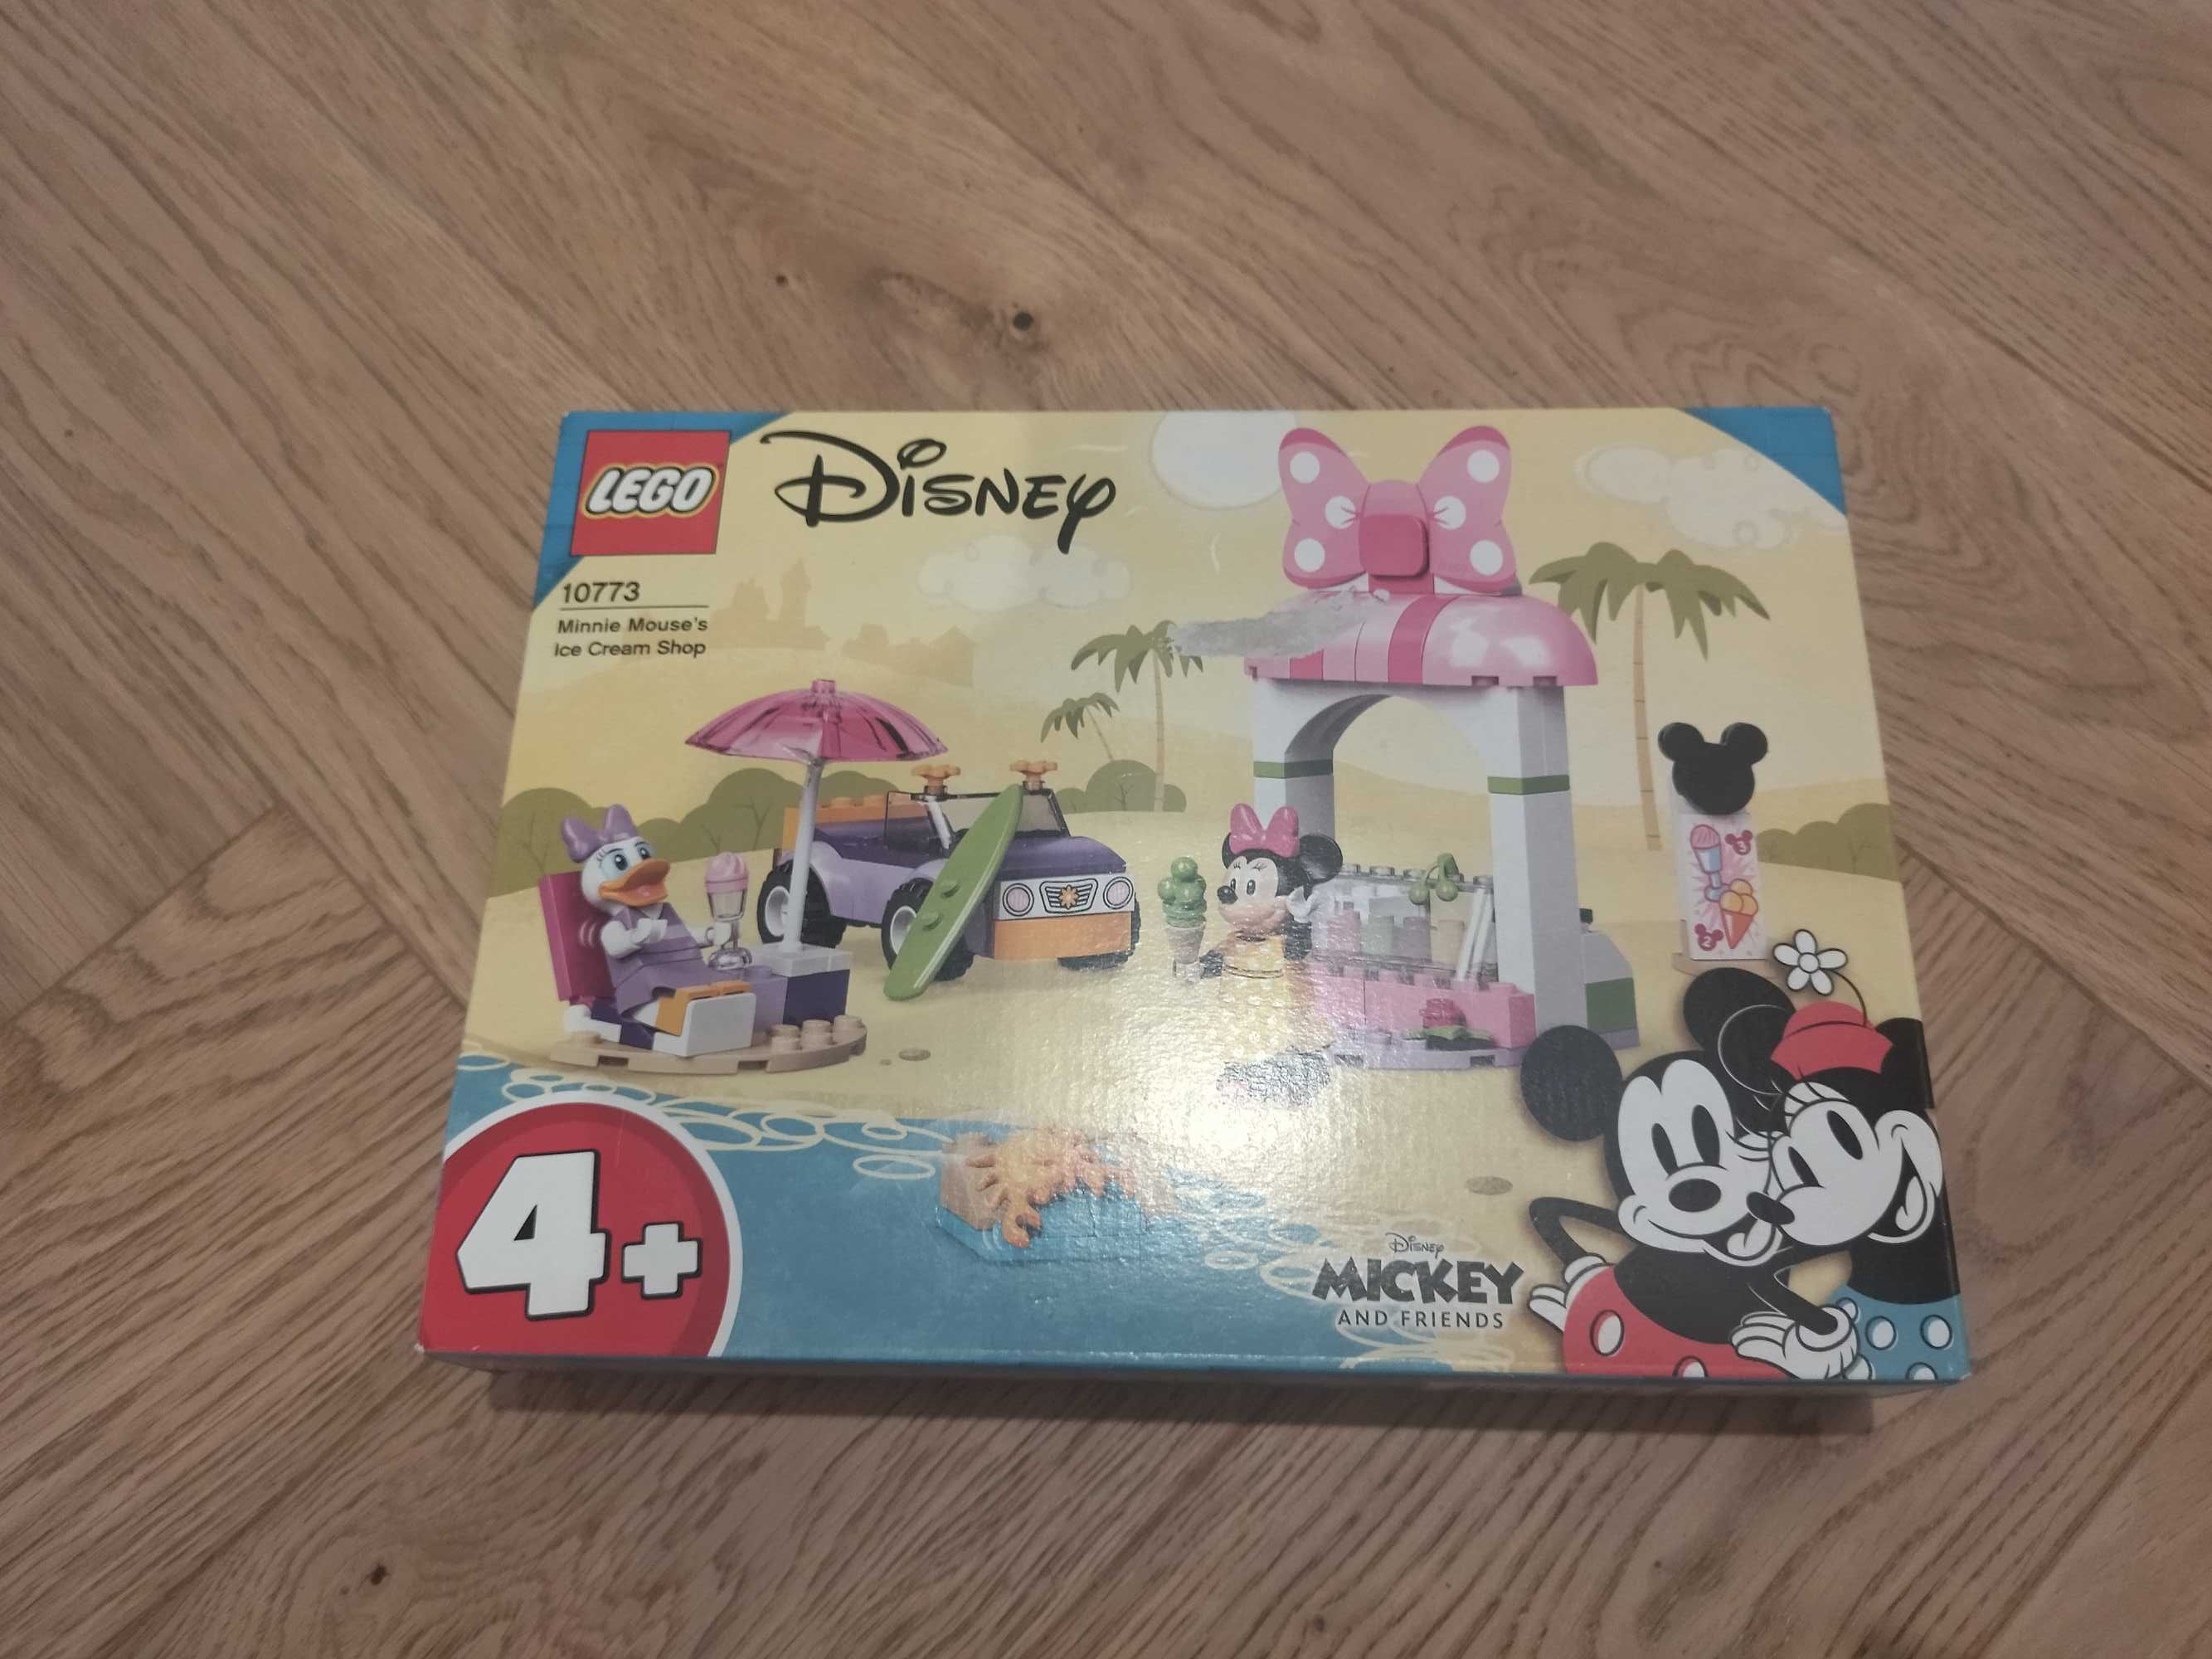 Lego 10773 Disney